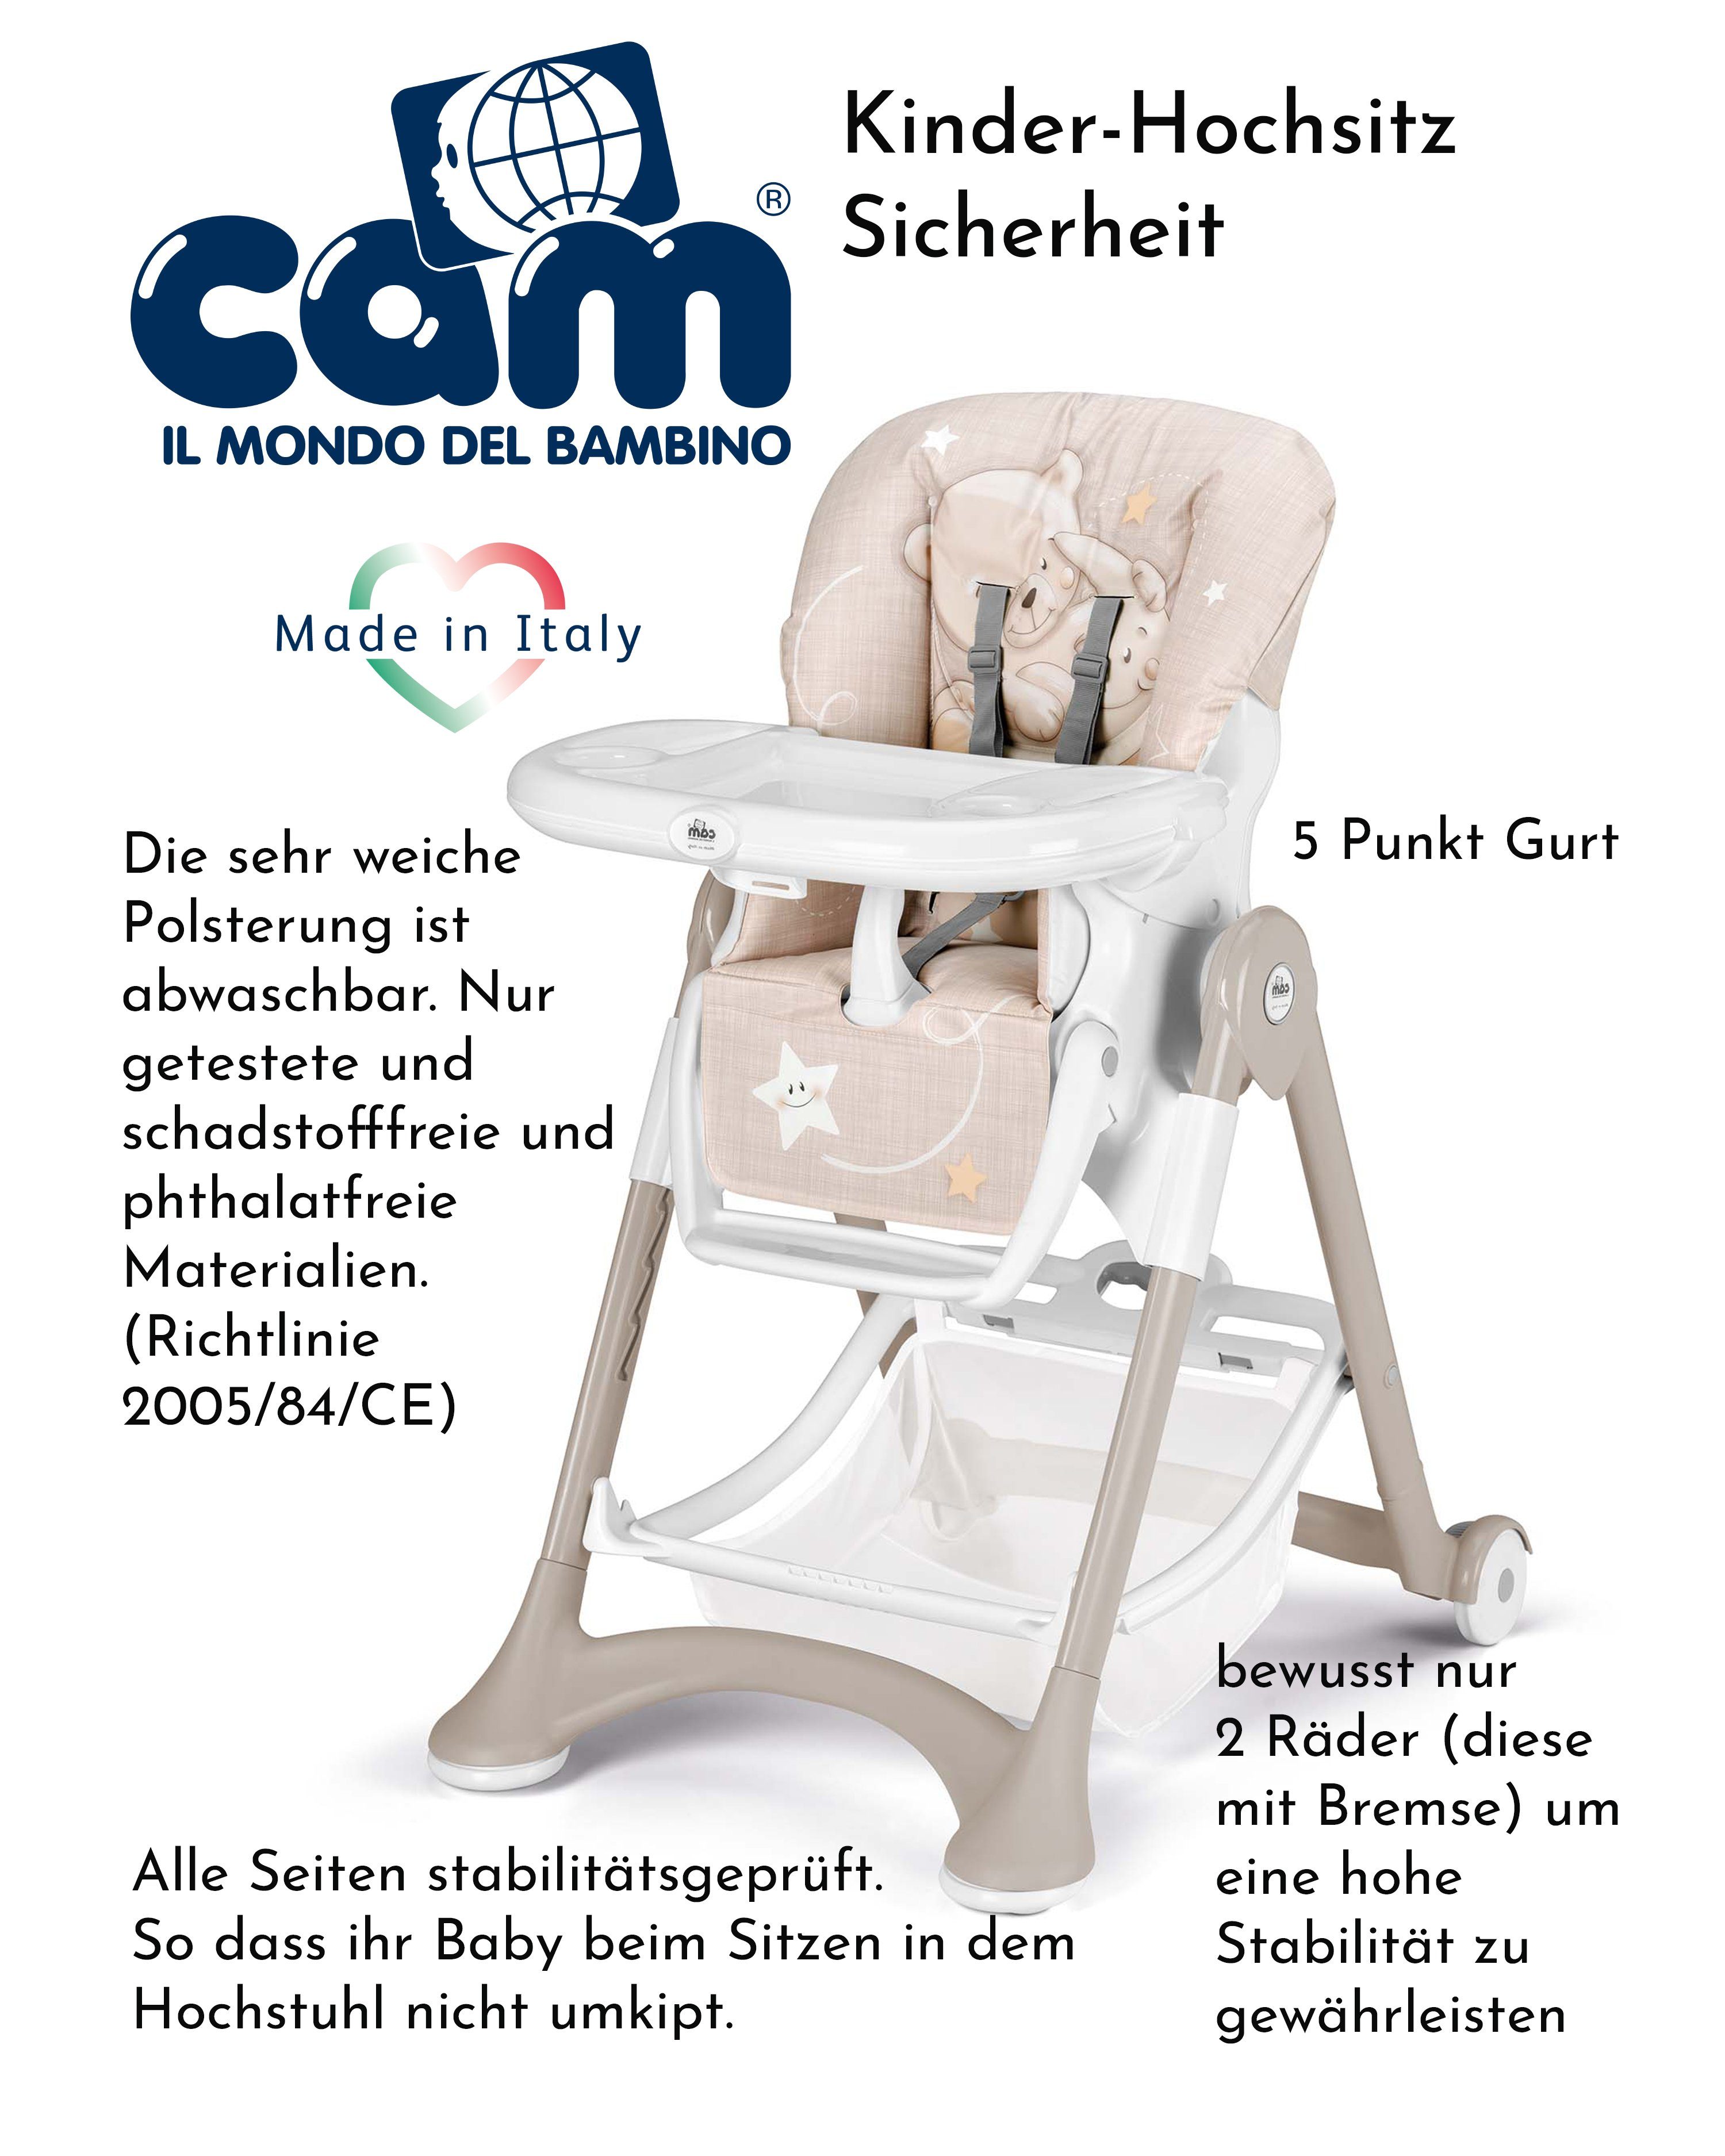 Hochstuhl Baby-Stuhl Cam Mondbär mitwachsend Tablett verstellbar CAM CAMPIONE inkl. - 260